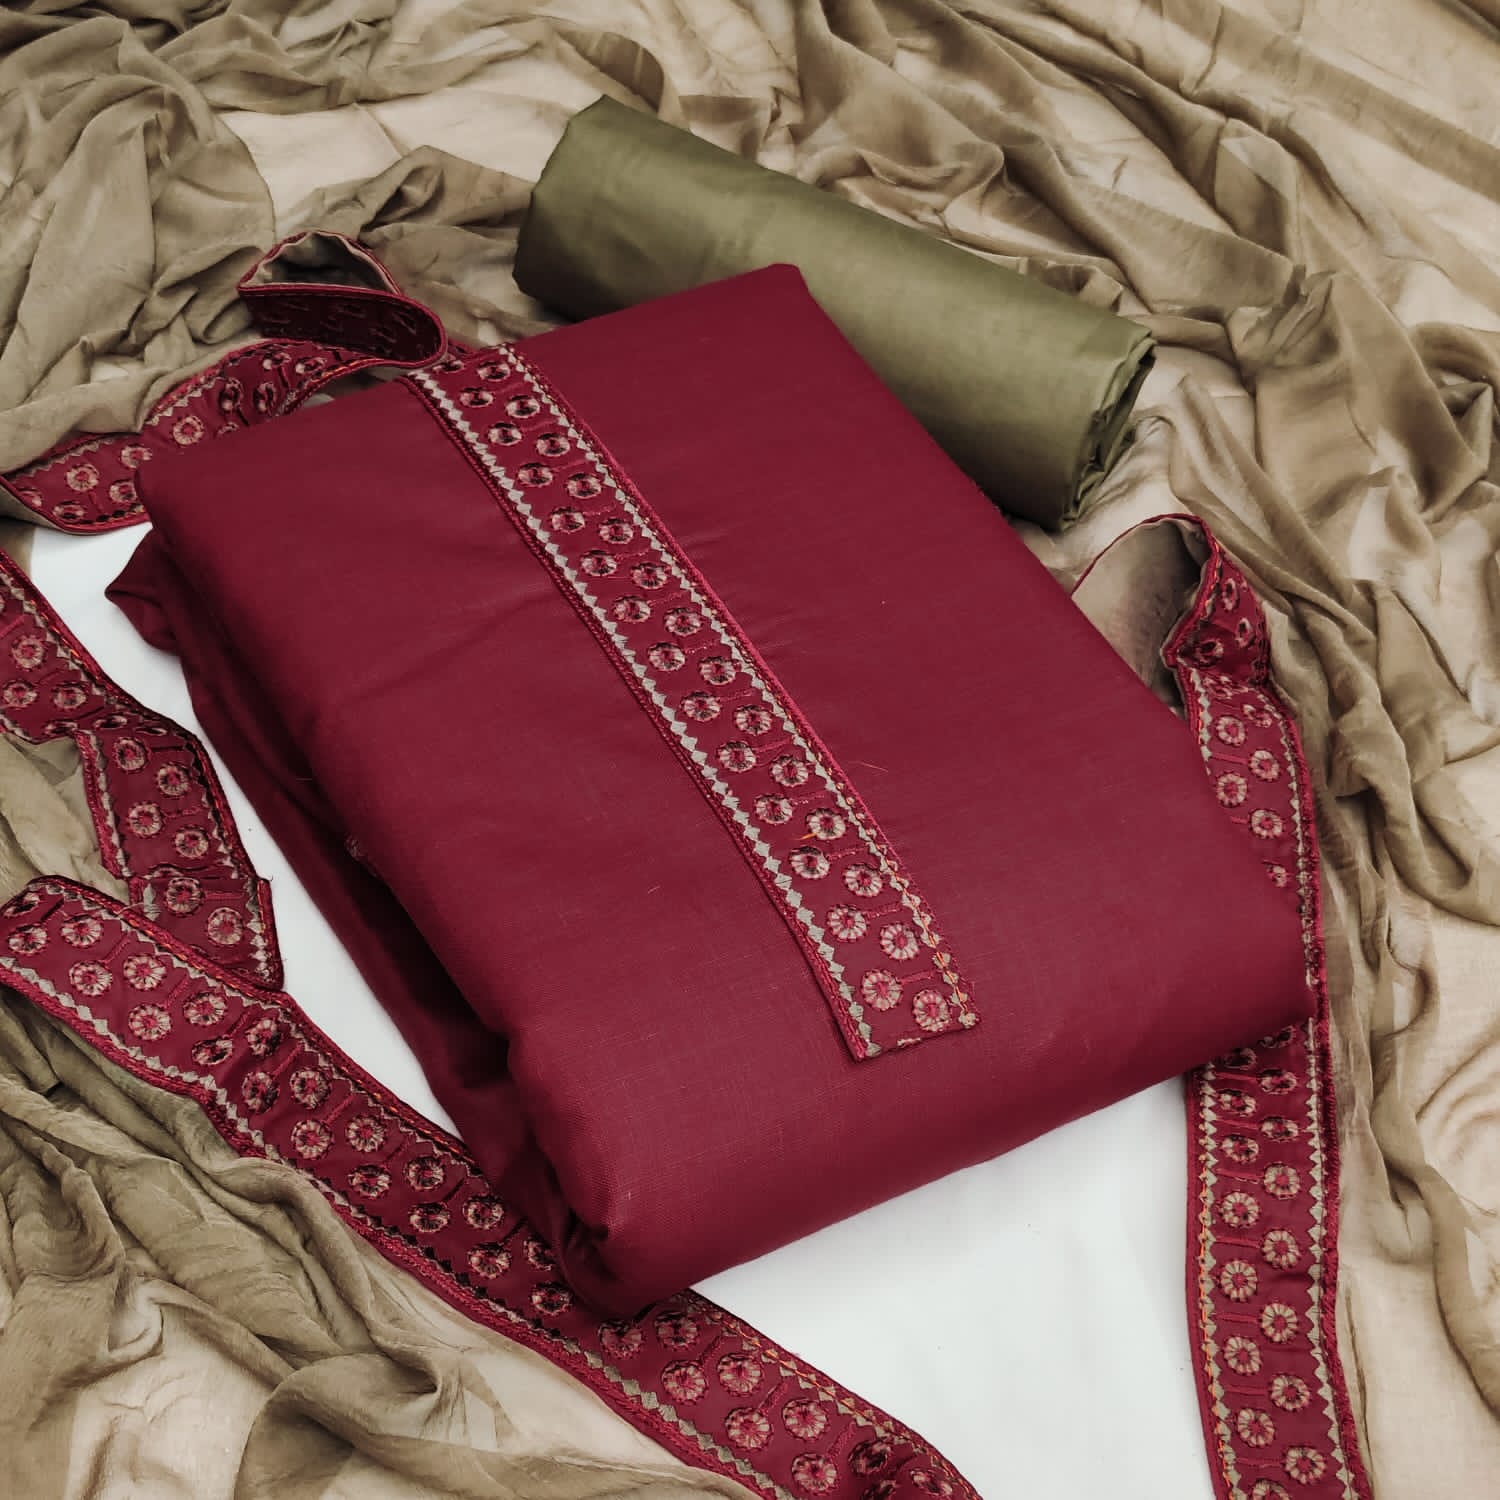 Bombay Cotton Neck work Dress Material (Unstitched) Ethenika.com 